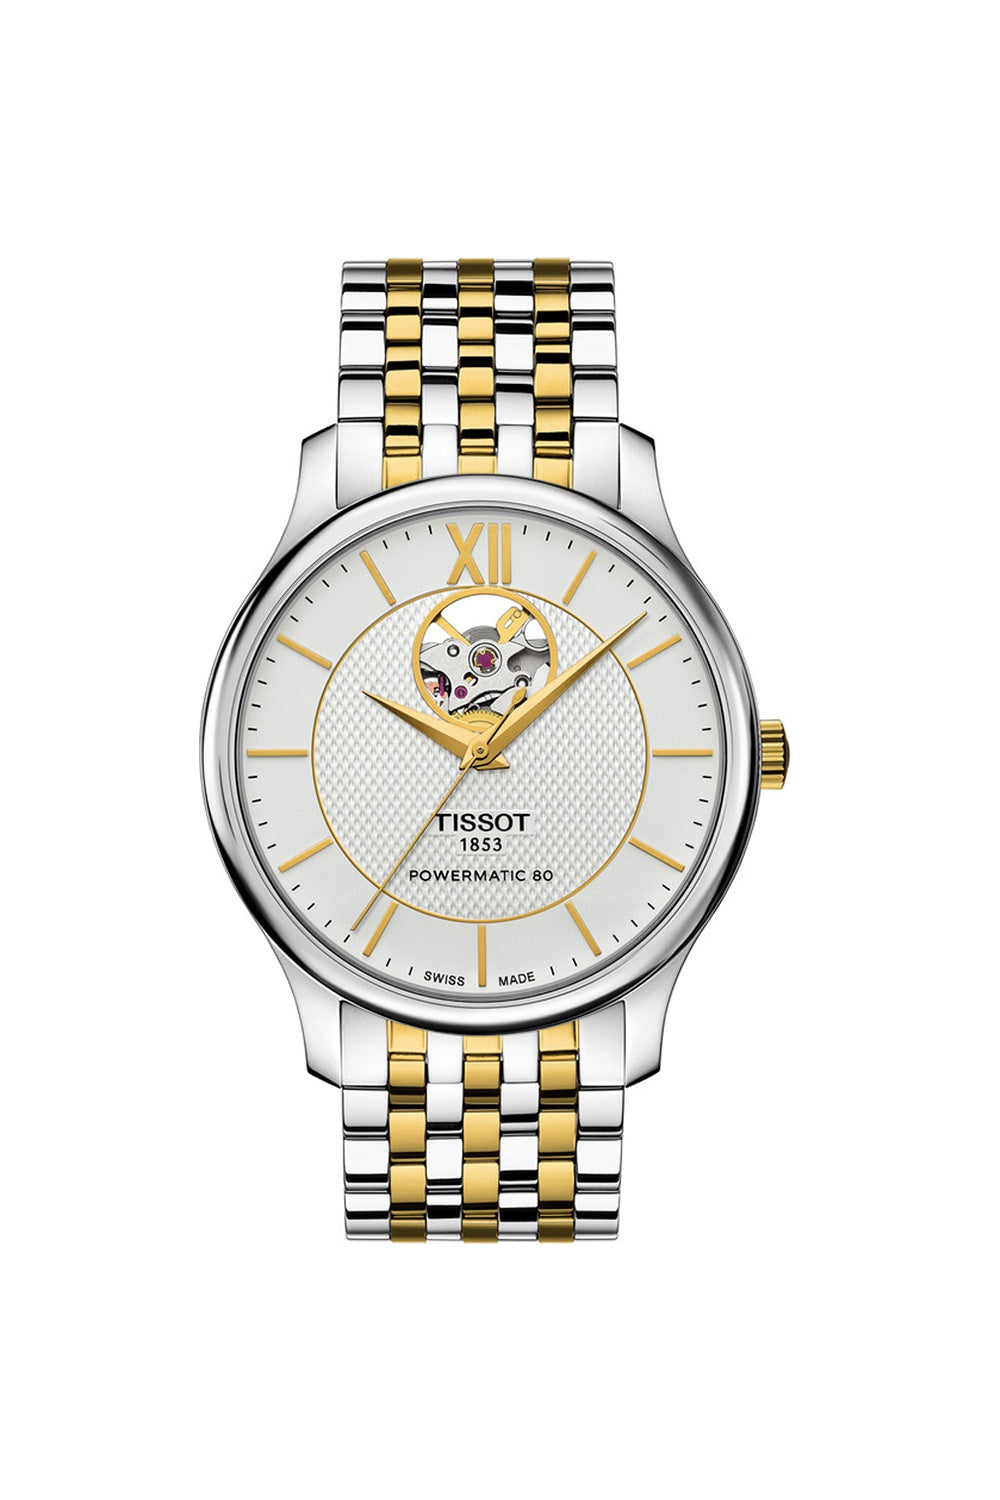 Tissot Tradition Powermatic 80 Open Heart Automatic Men's Watch T0639072203800